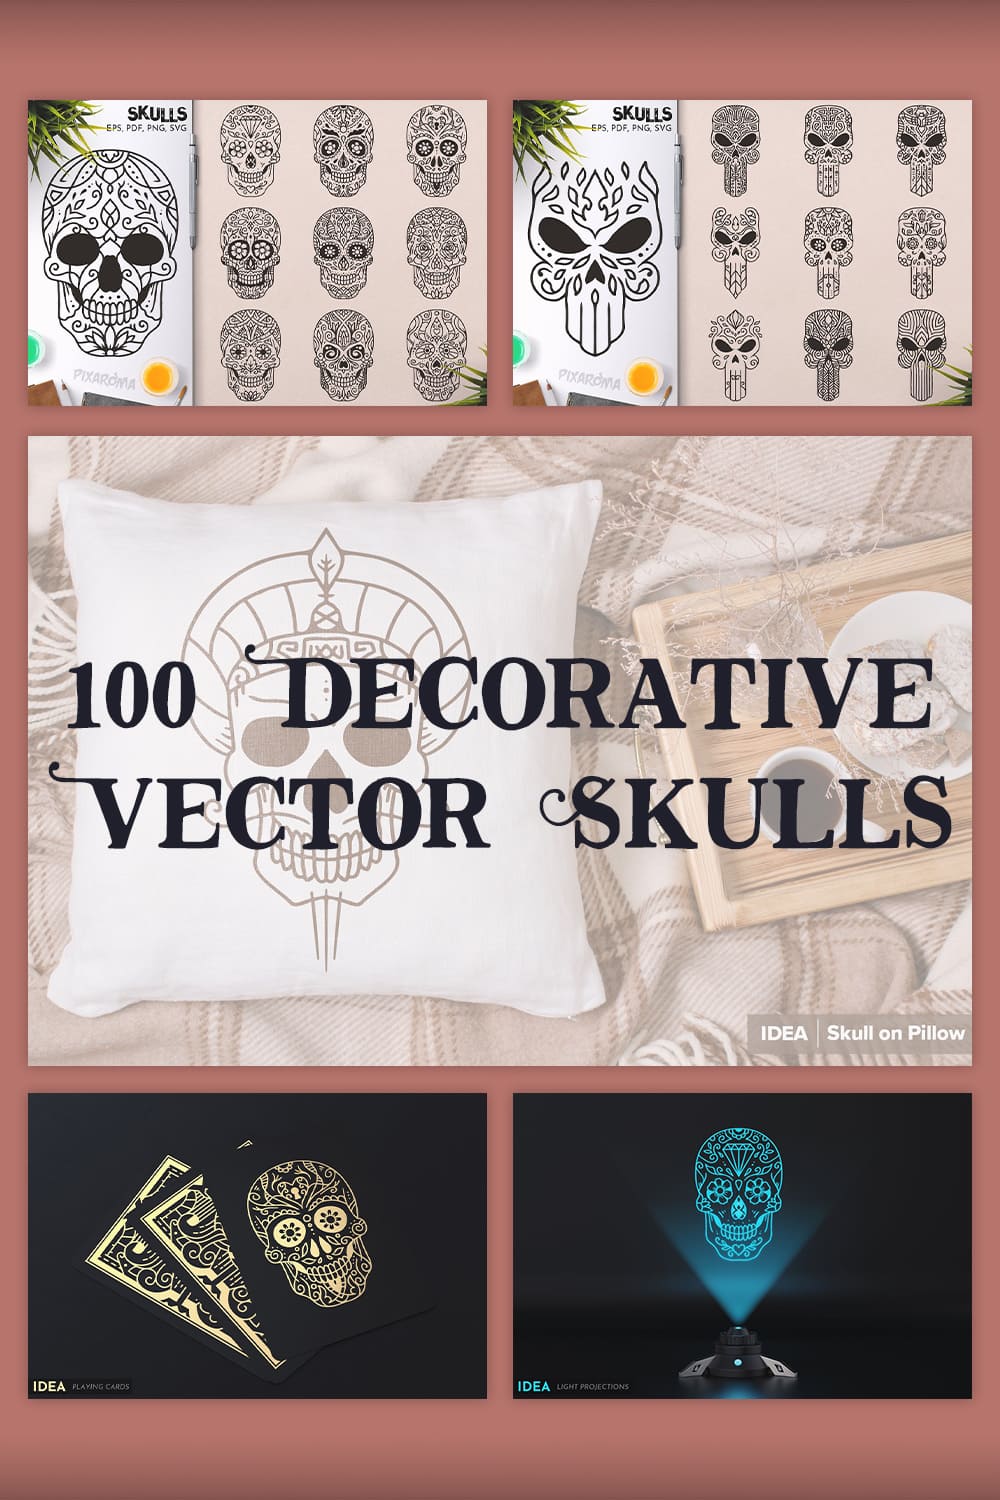 100 Decorative Vector Skulls pinterest image.